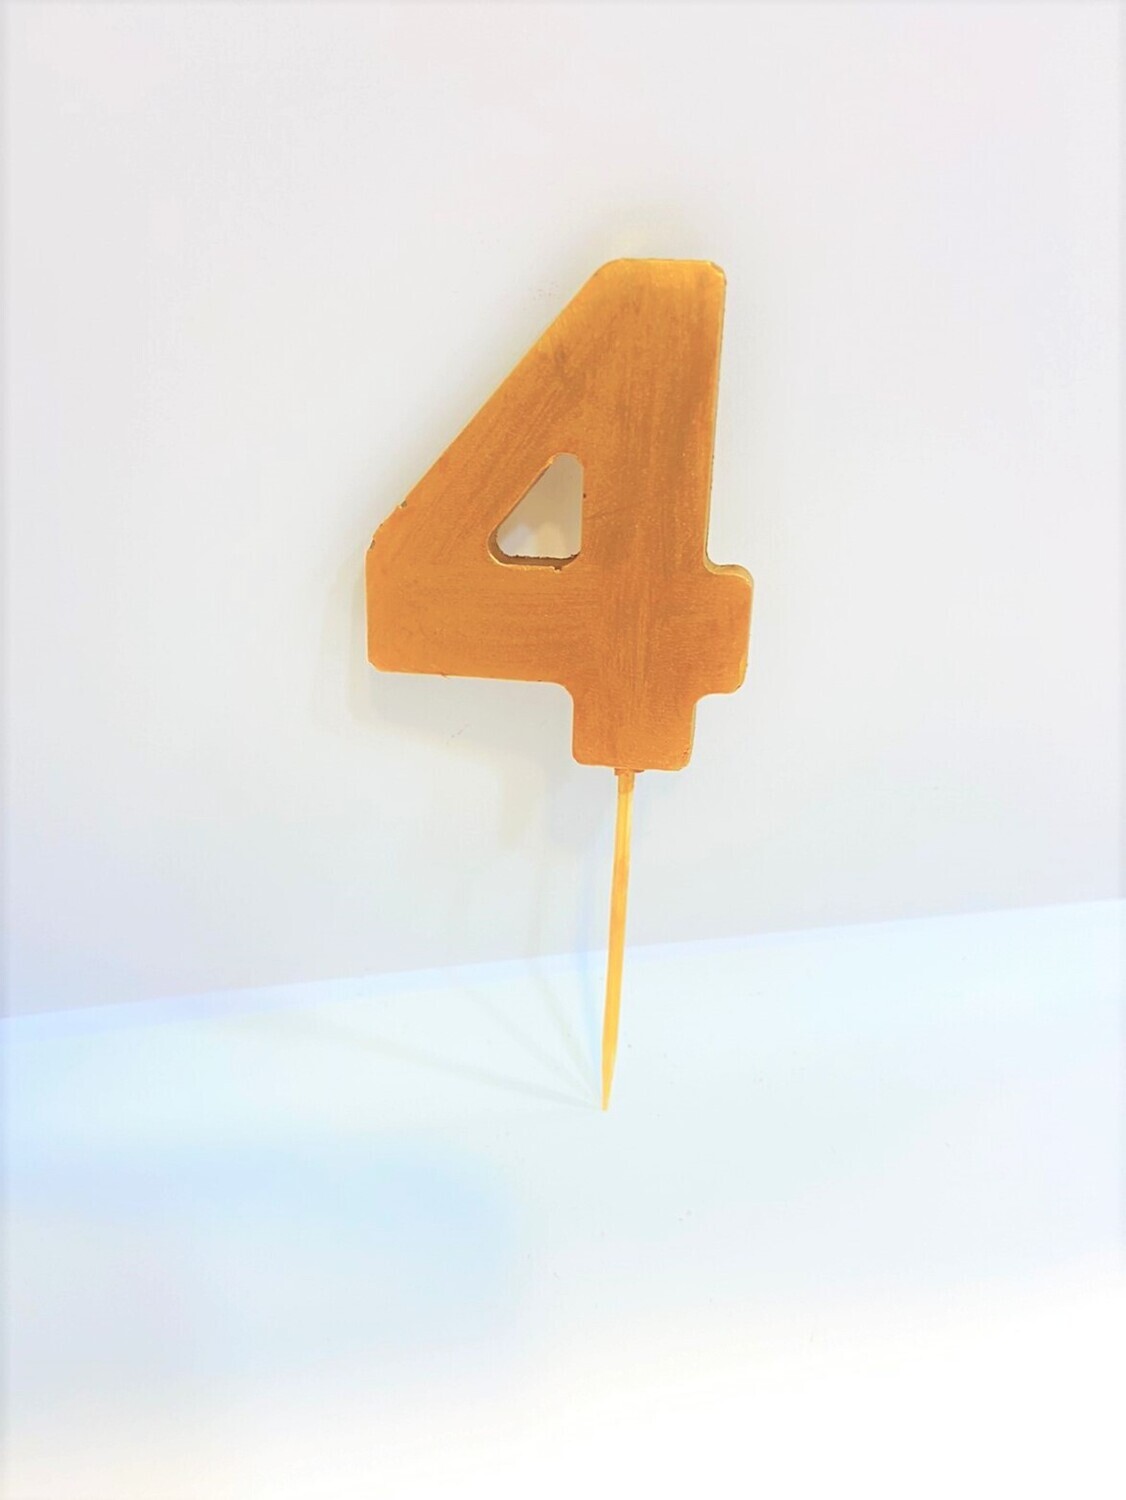 Цифра "4" АНТИЧНАЯ (золотая) на шпажке, из шоколадной глазури